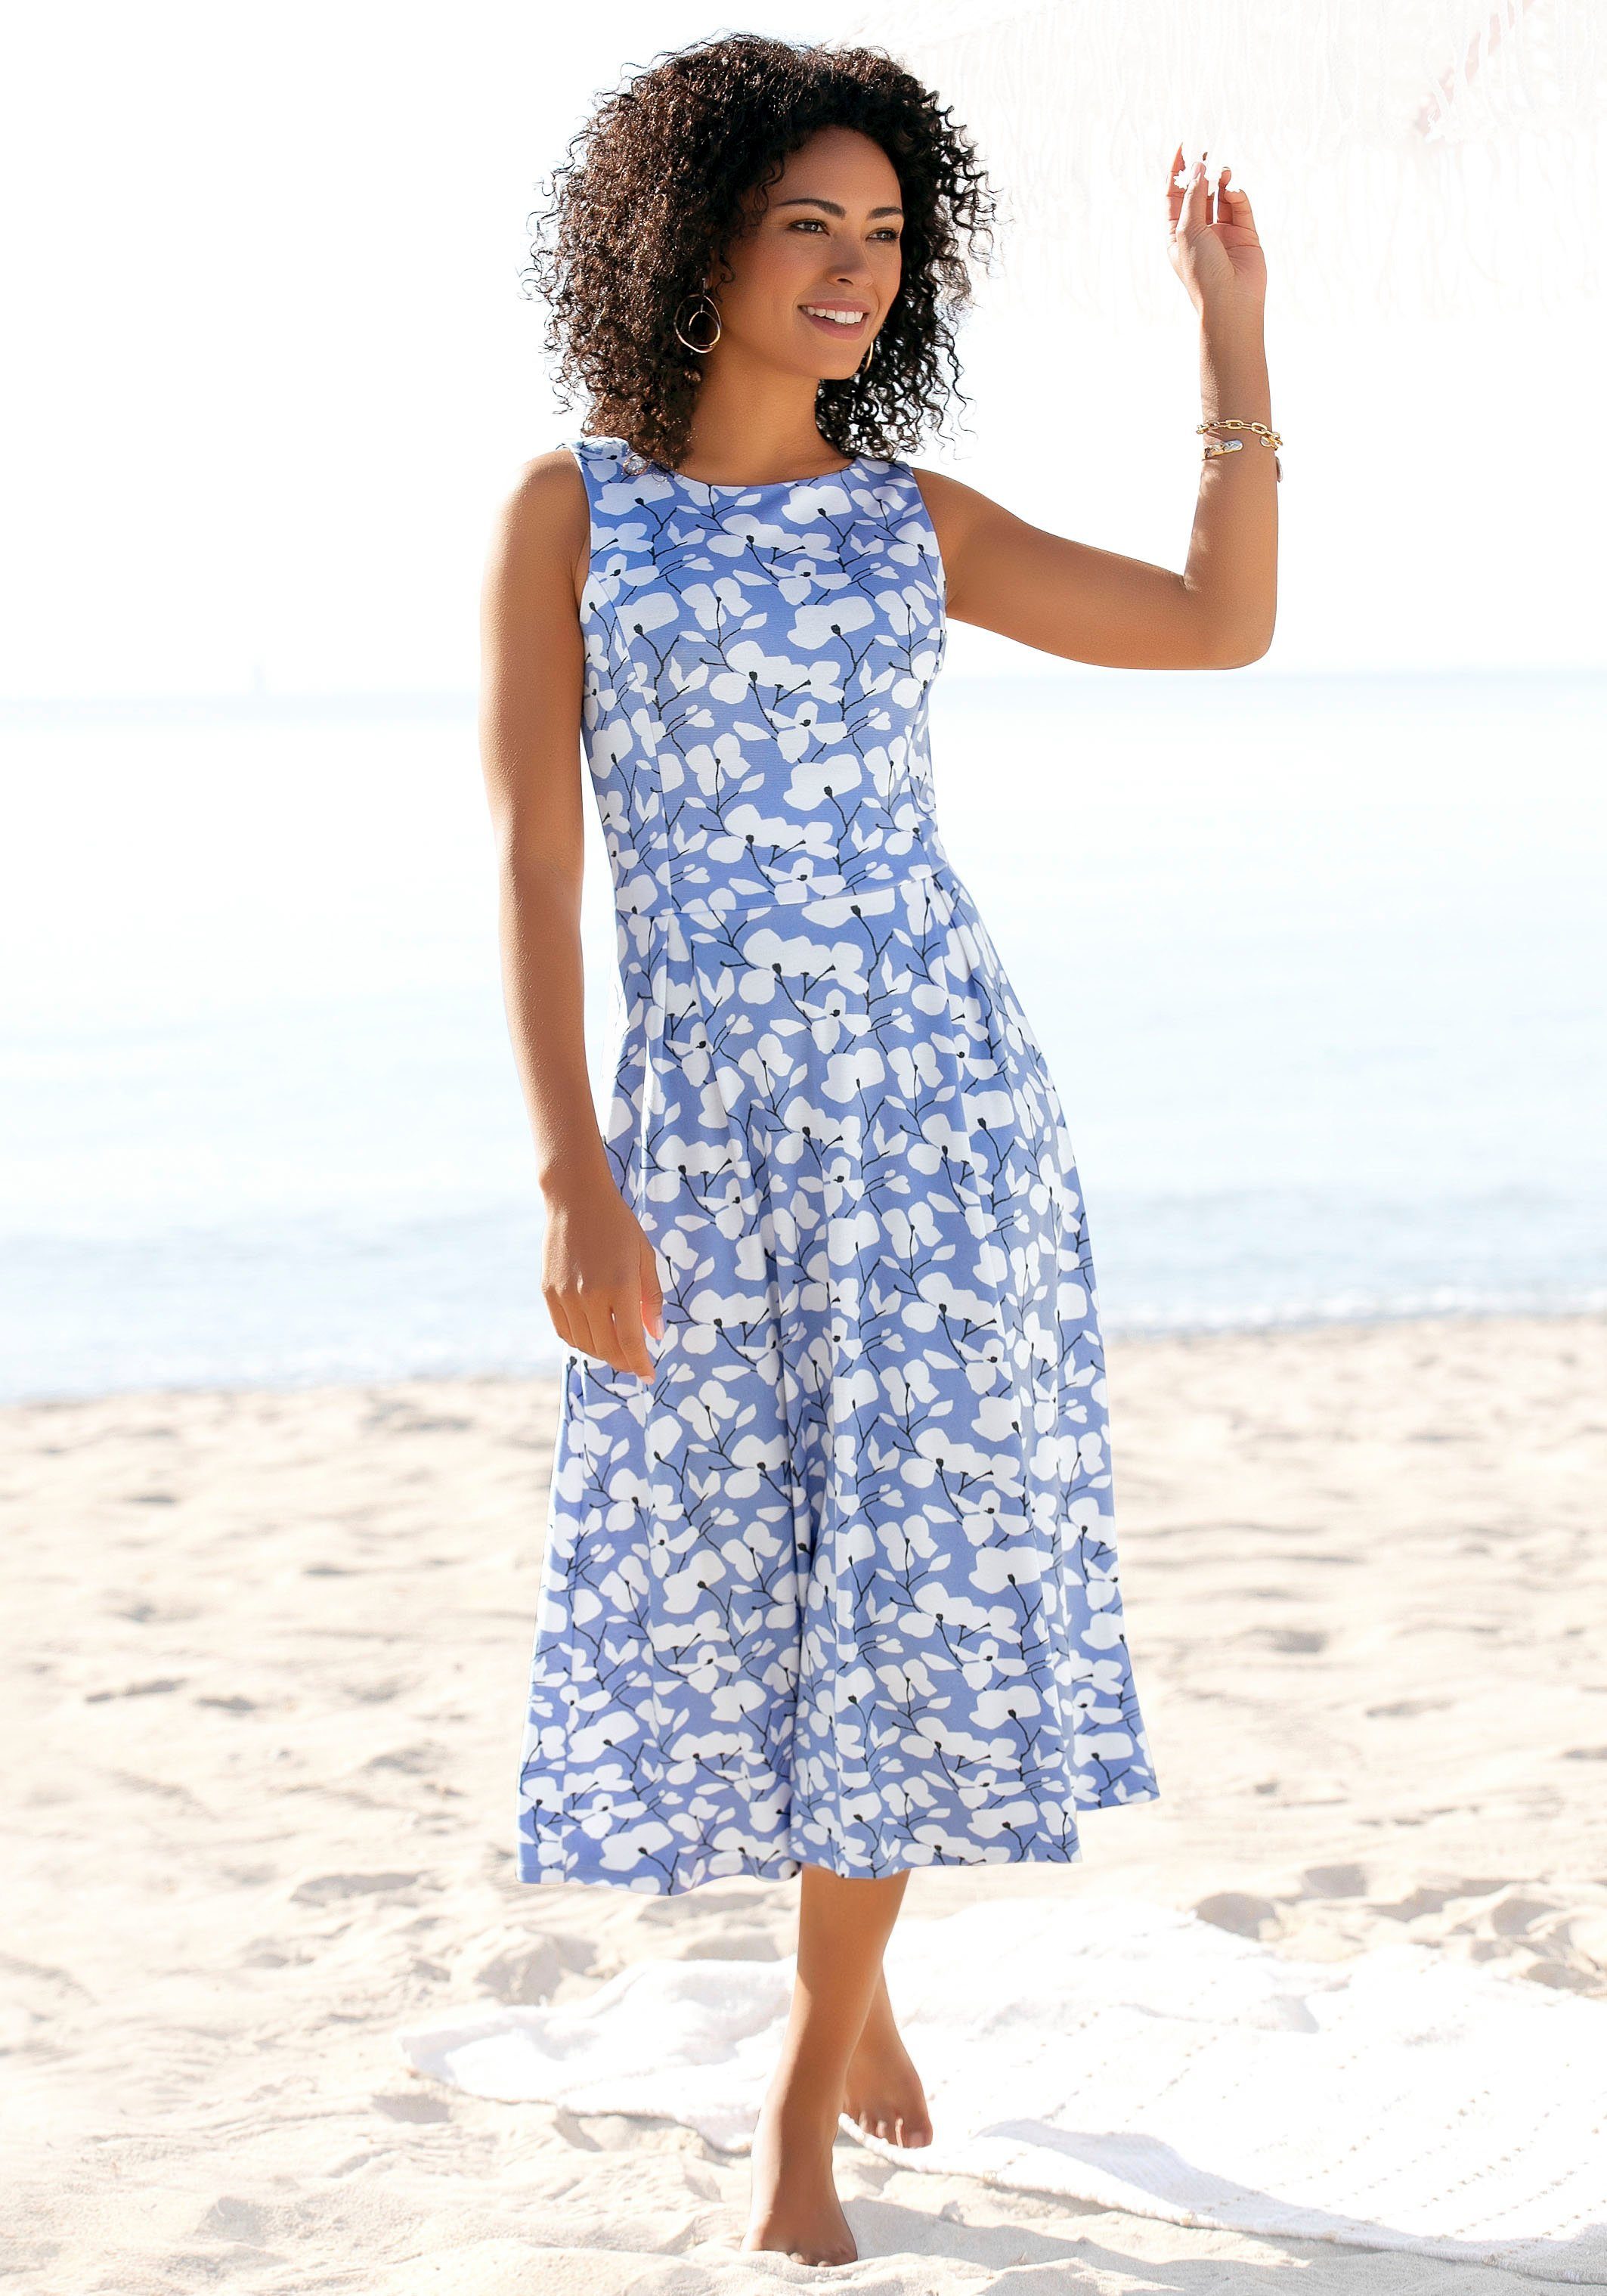 Beachtime Midi-jurk met bloemenprint, midi jurk van jersey stof, strandjurk